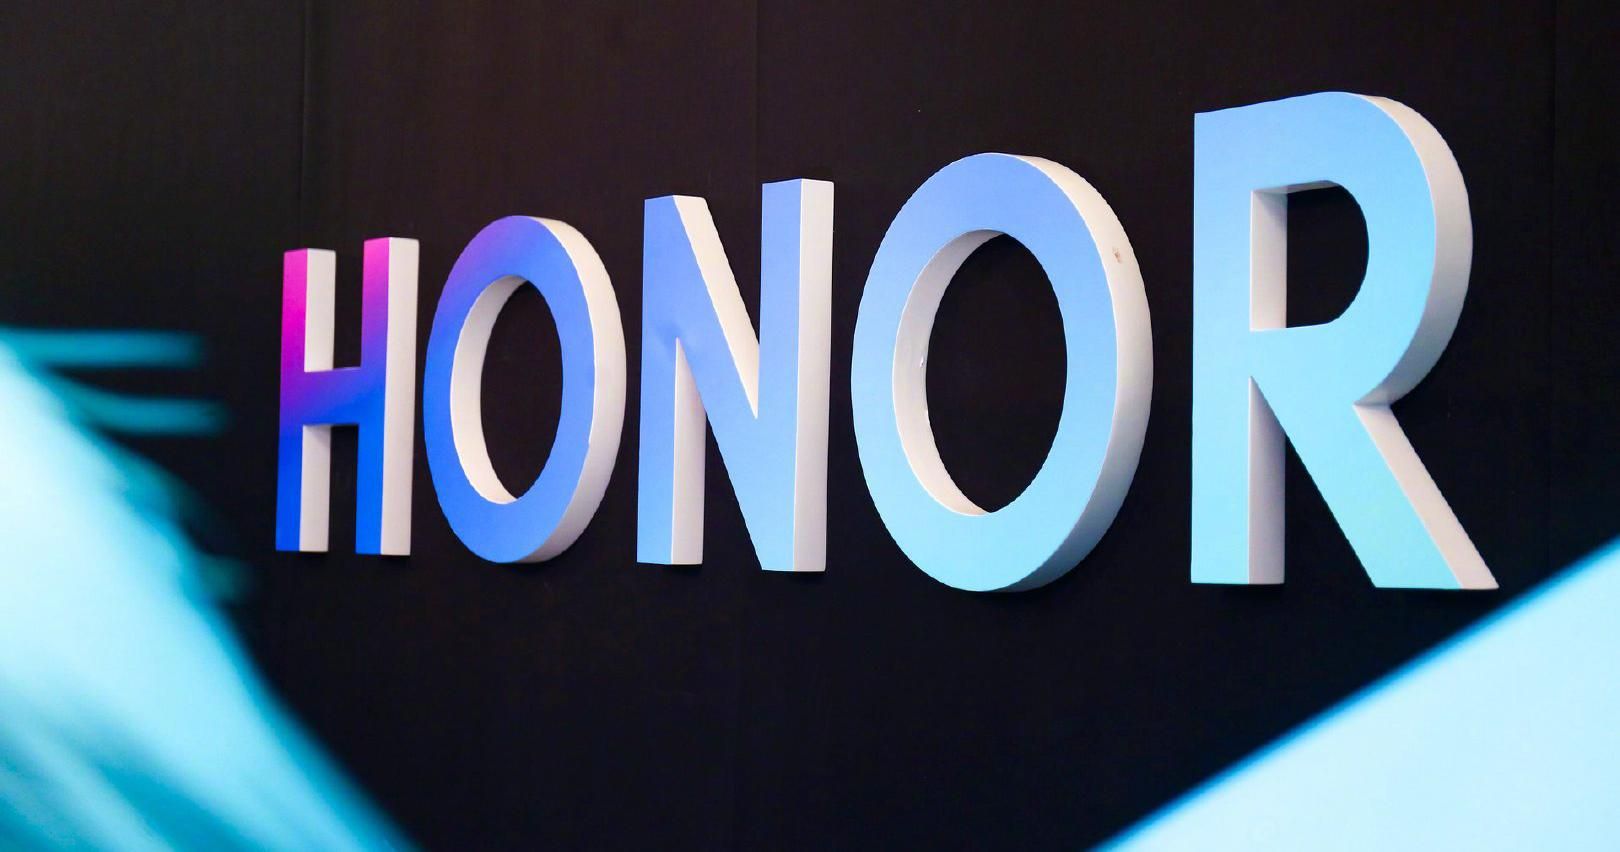 Huawei официально продала бренд Honor